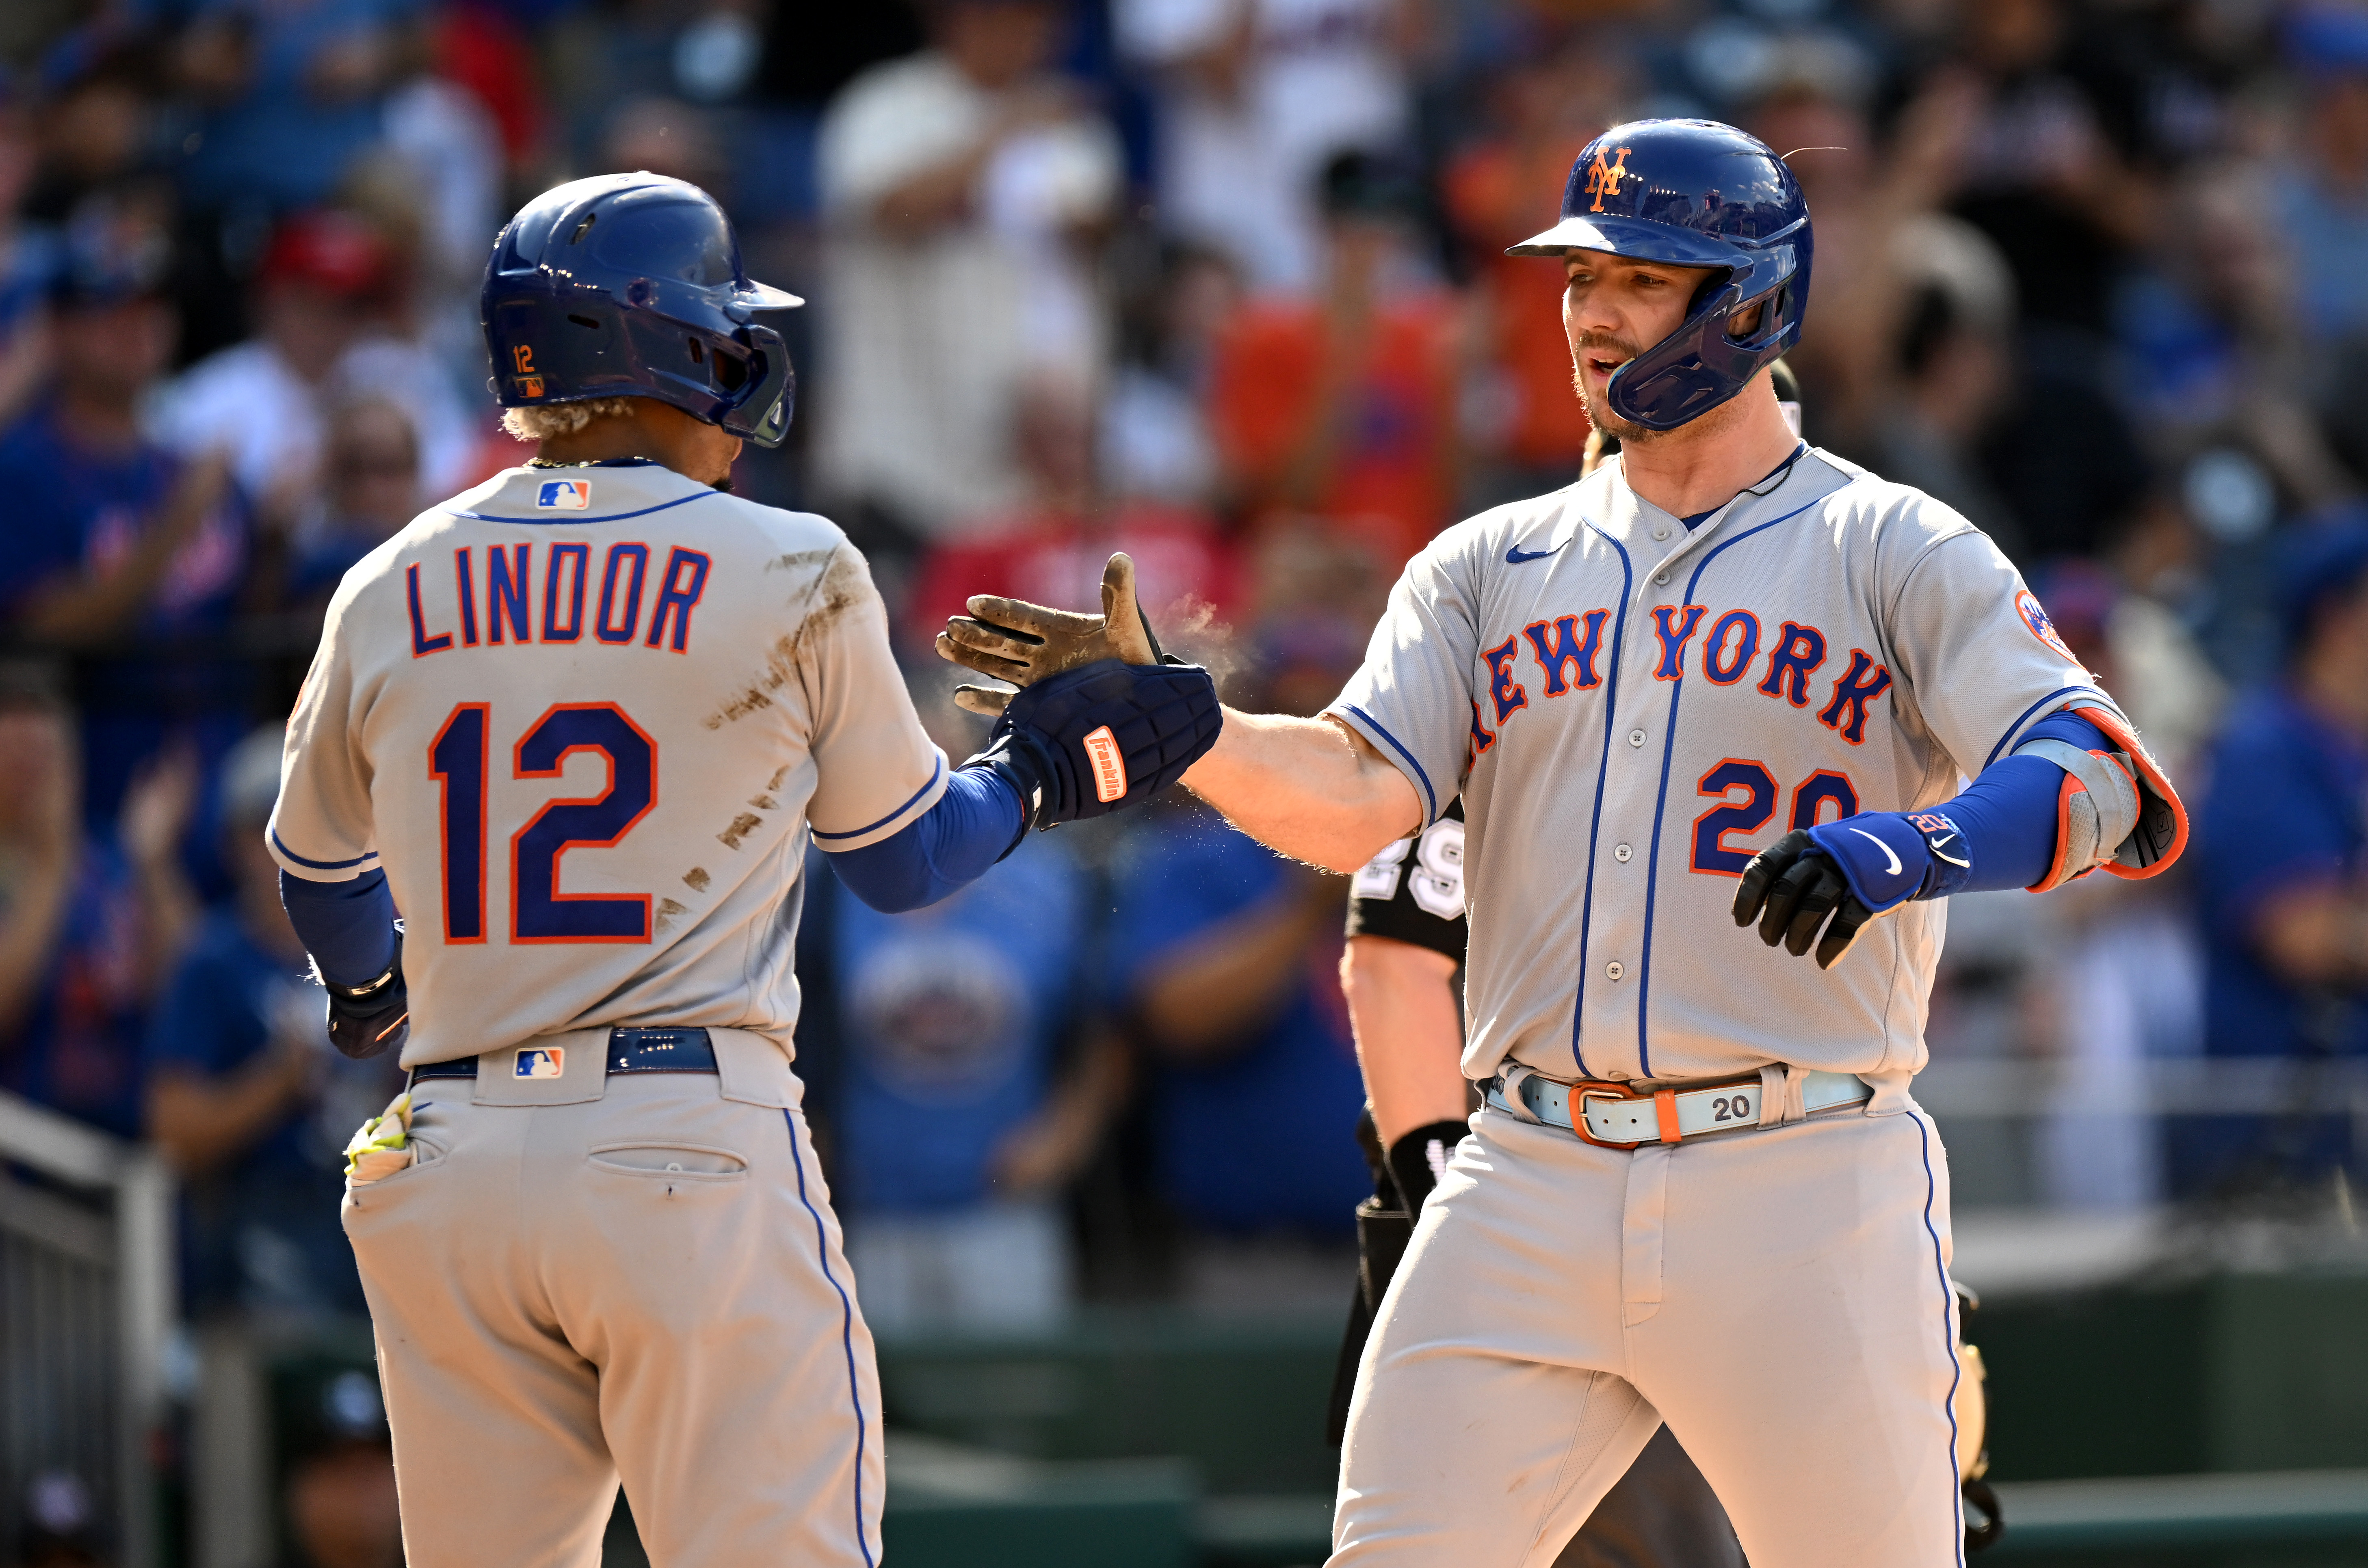 Mets' Francisco Lindor says he's 'best shortstop in the game